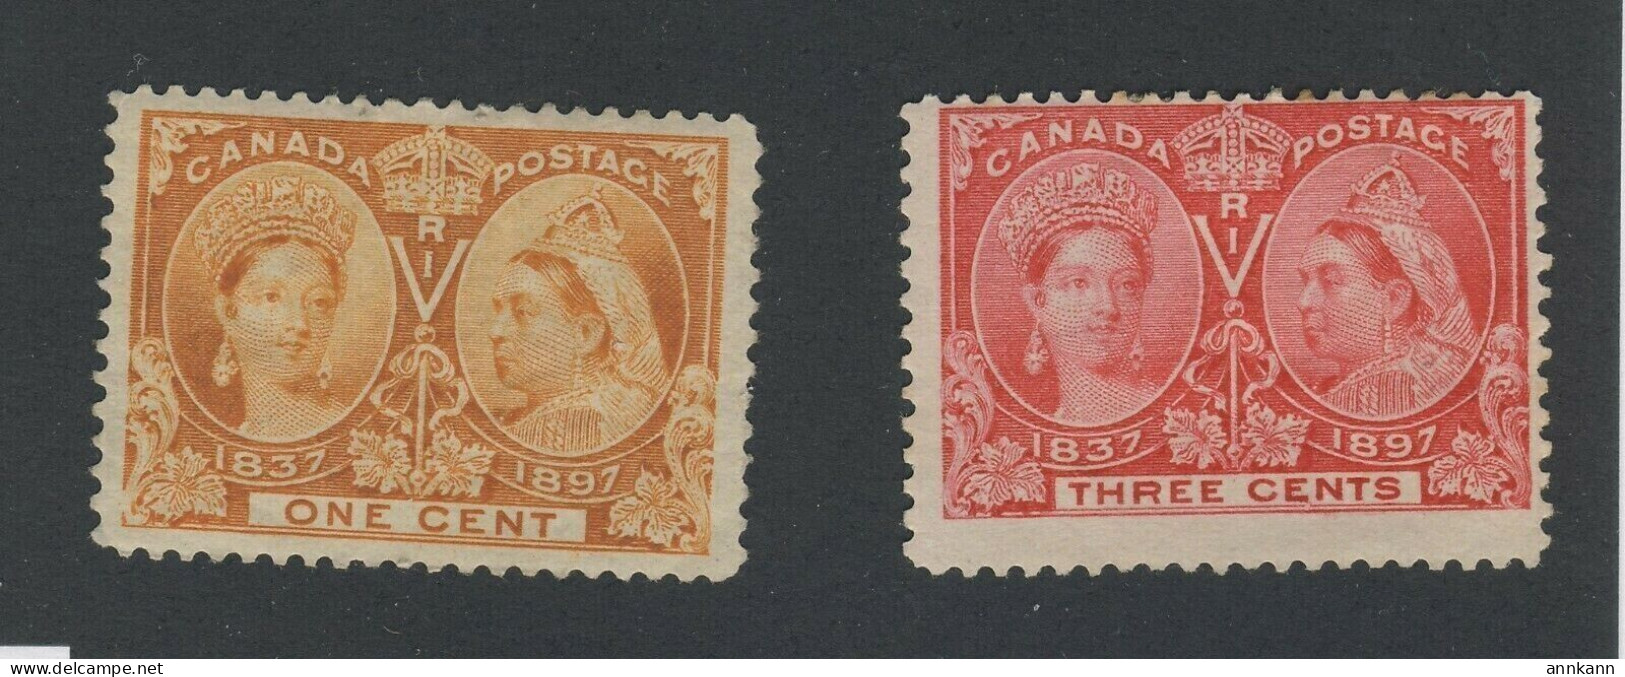 2x Canada Victoria Jubilee MH Stamps #51-1c F/VF 53-3c Fine Guide Value = $35.00 - Ungebraucht